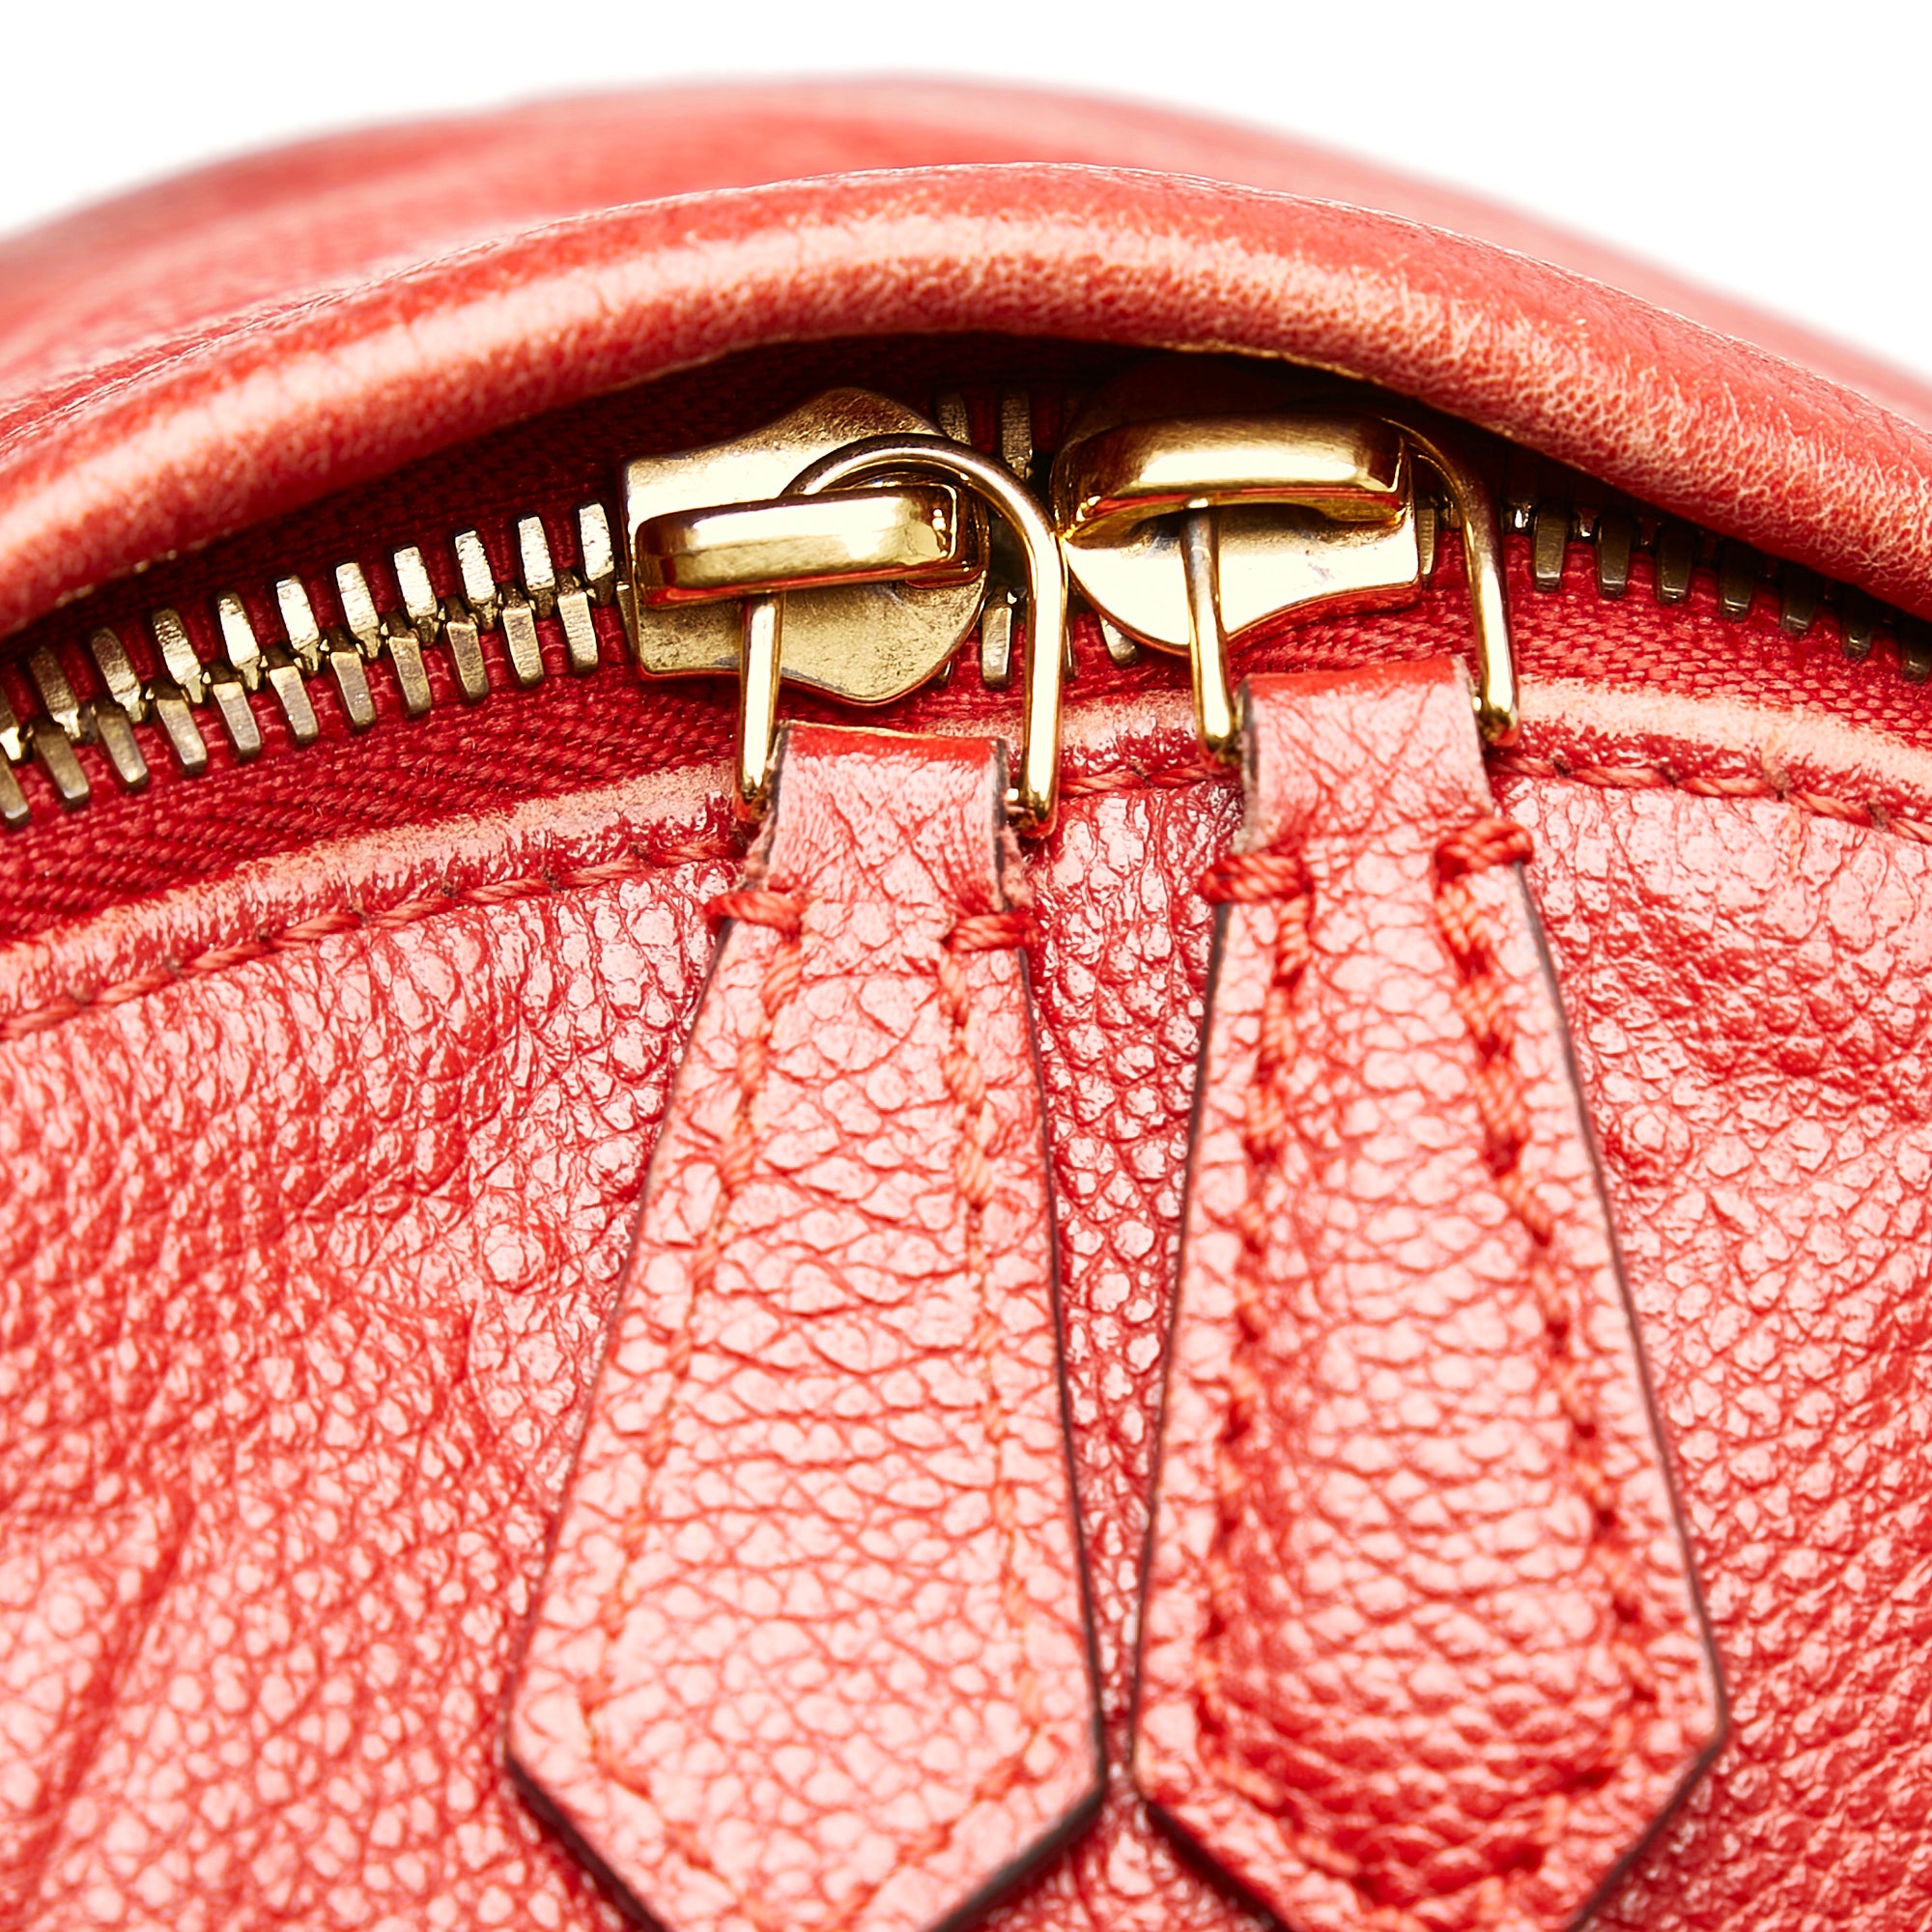 Louis Vuitton Sorbonne Monogram Empreinte Leather Backpack Red